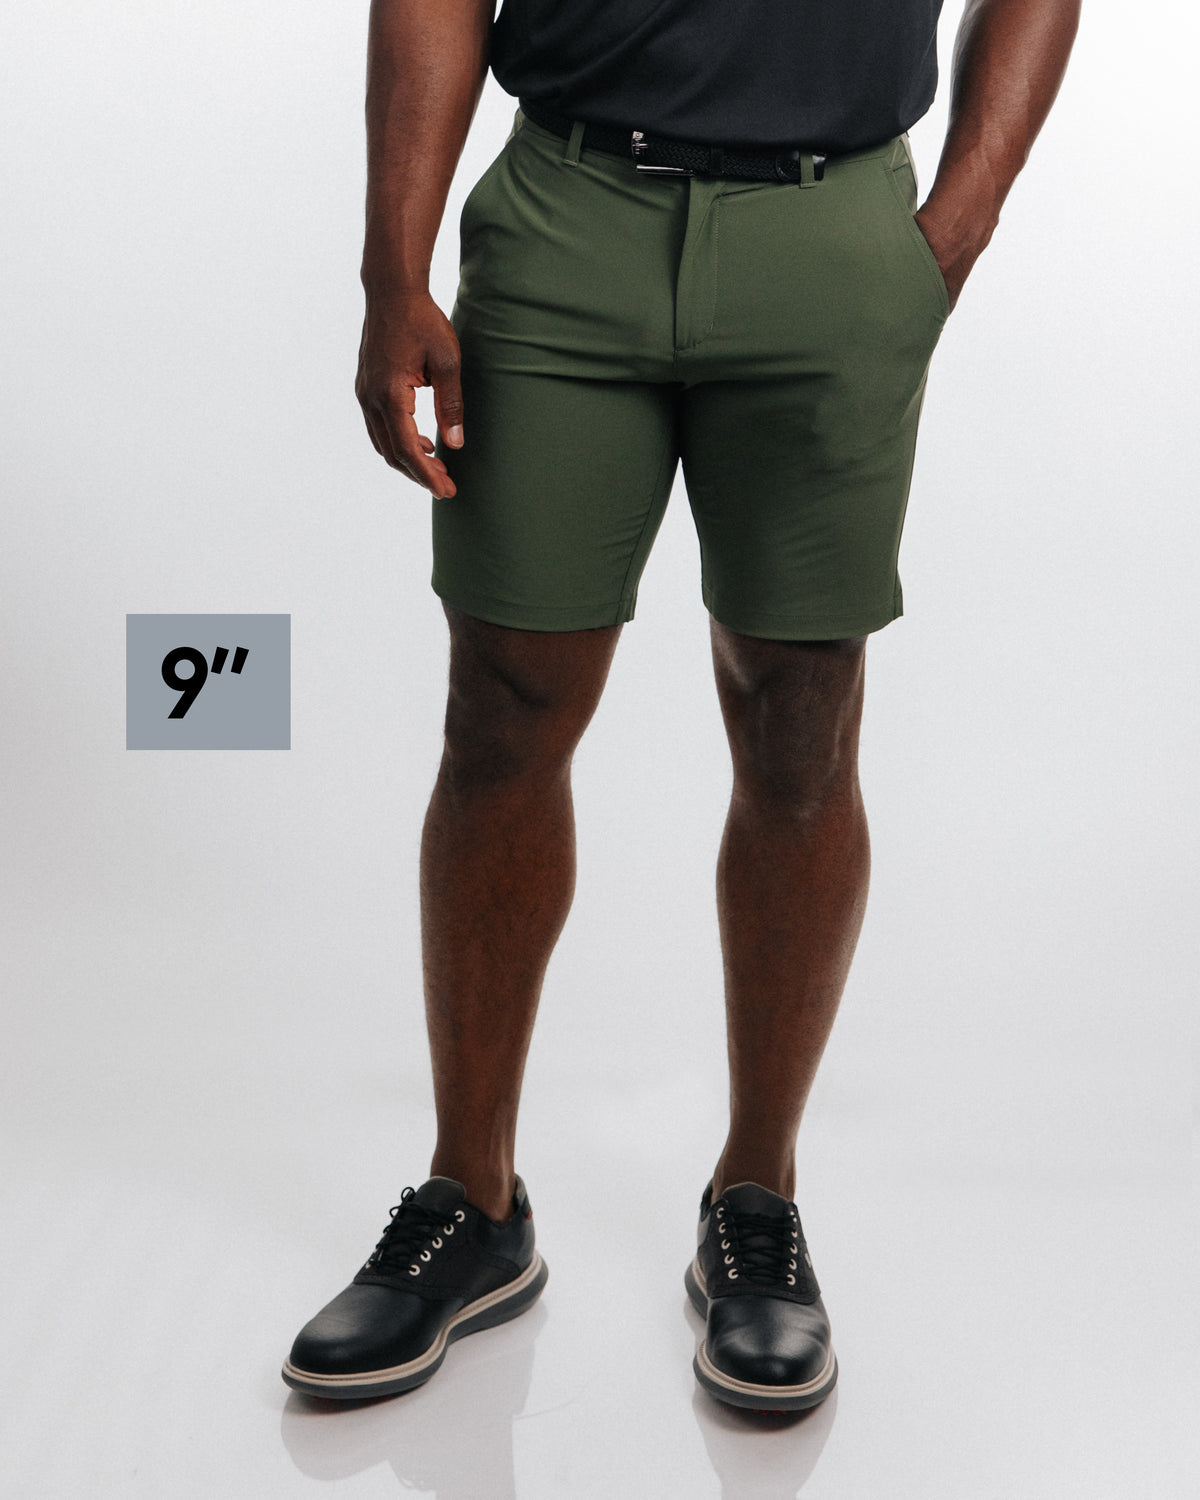 Primo Olive Shorts - 7", 9", 11"